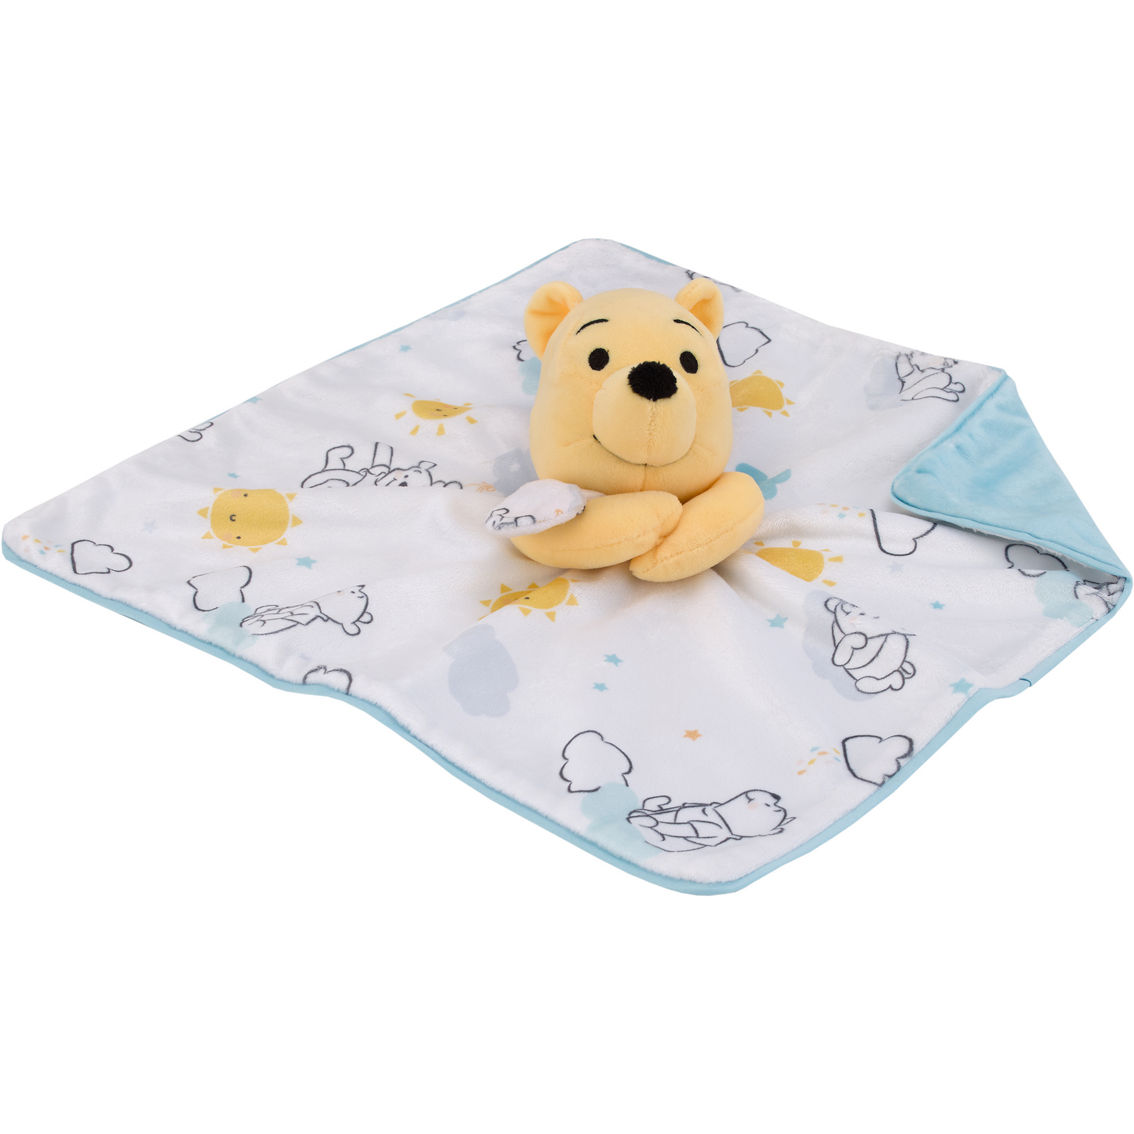 Disney Winnie the Pooh Baby Blanket and Security Blanket 2 pc. Set - Image 5 of 7